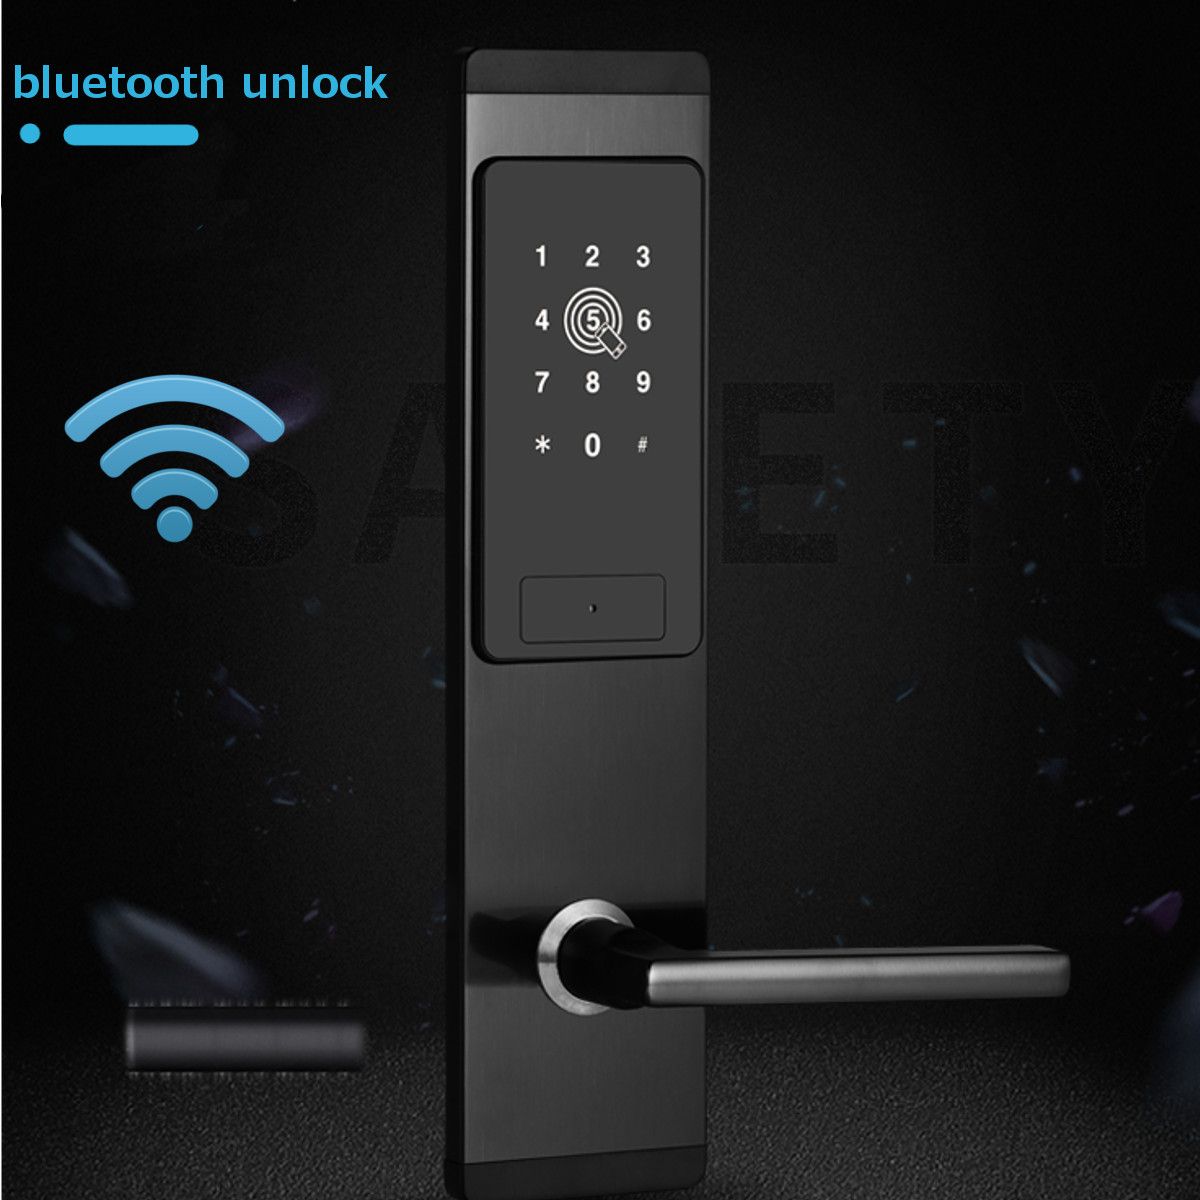 Smart-Electronic-Fingerprint-Lock-Smart-Home-Electronics-Door-Lock-Large-Indoor-Remote-Control-By-ke-1632853